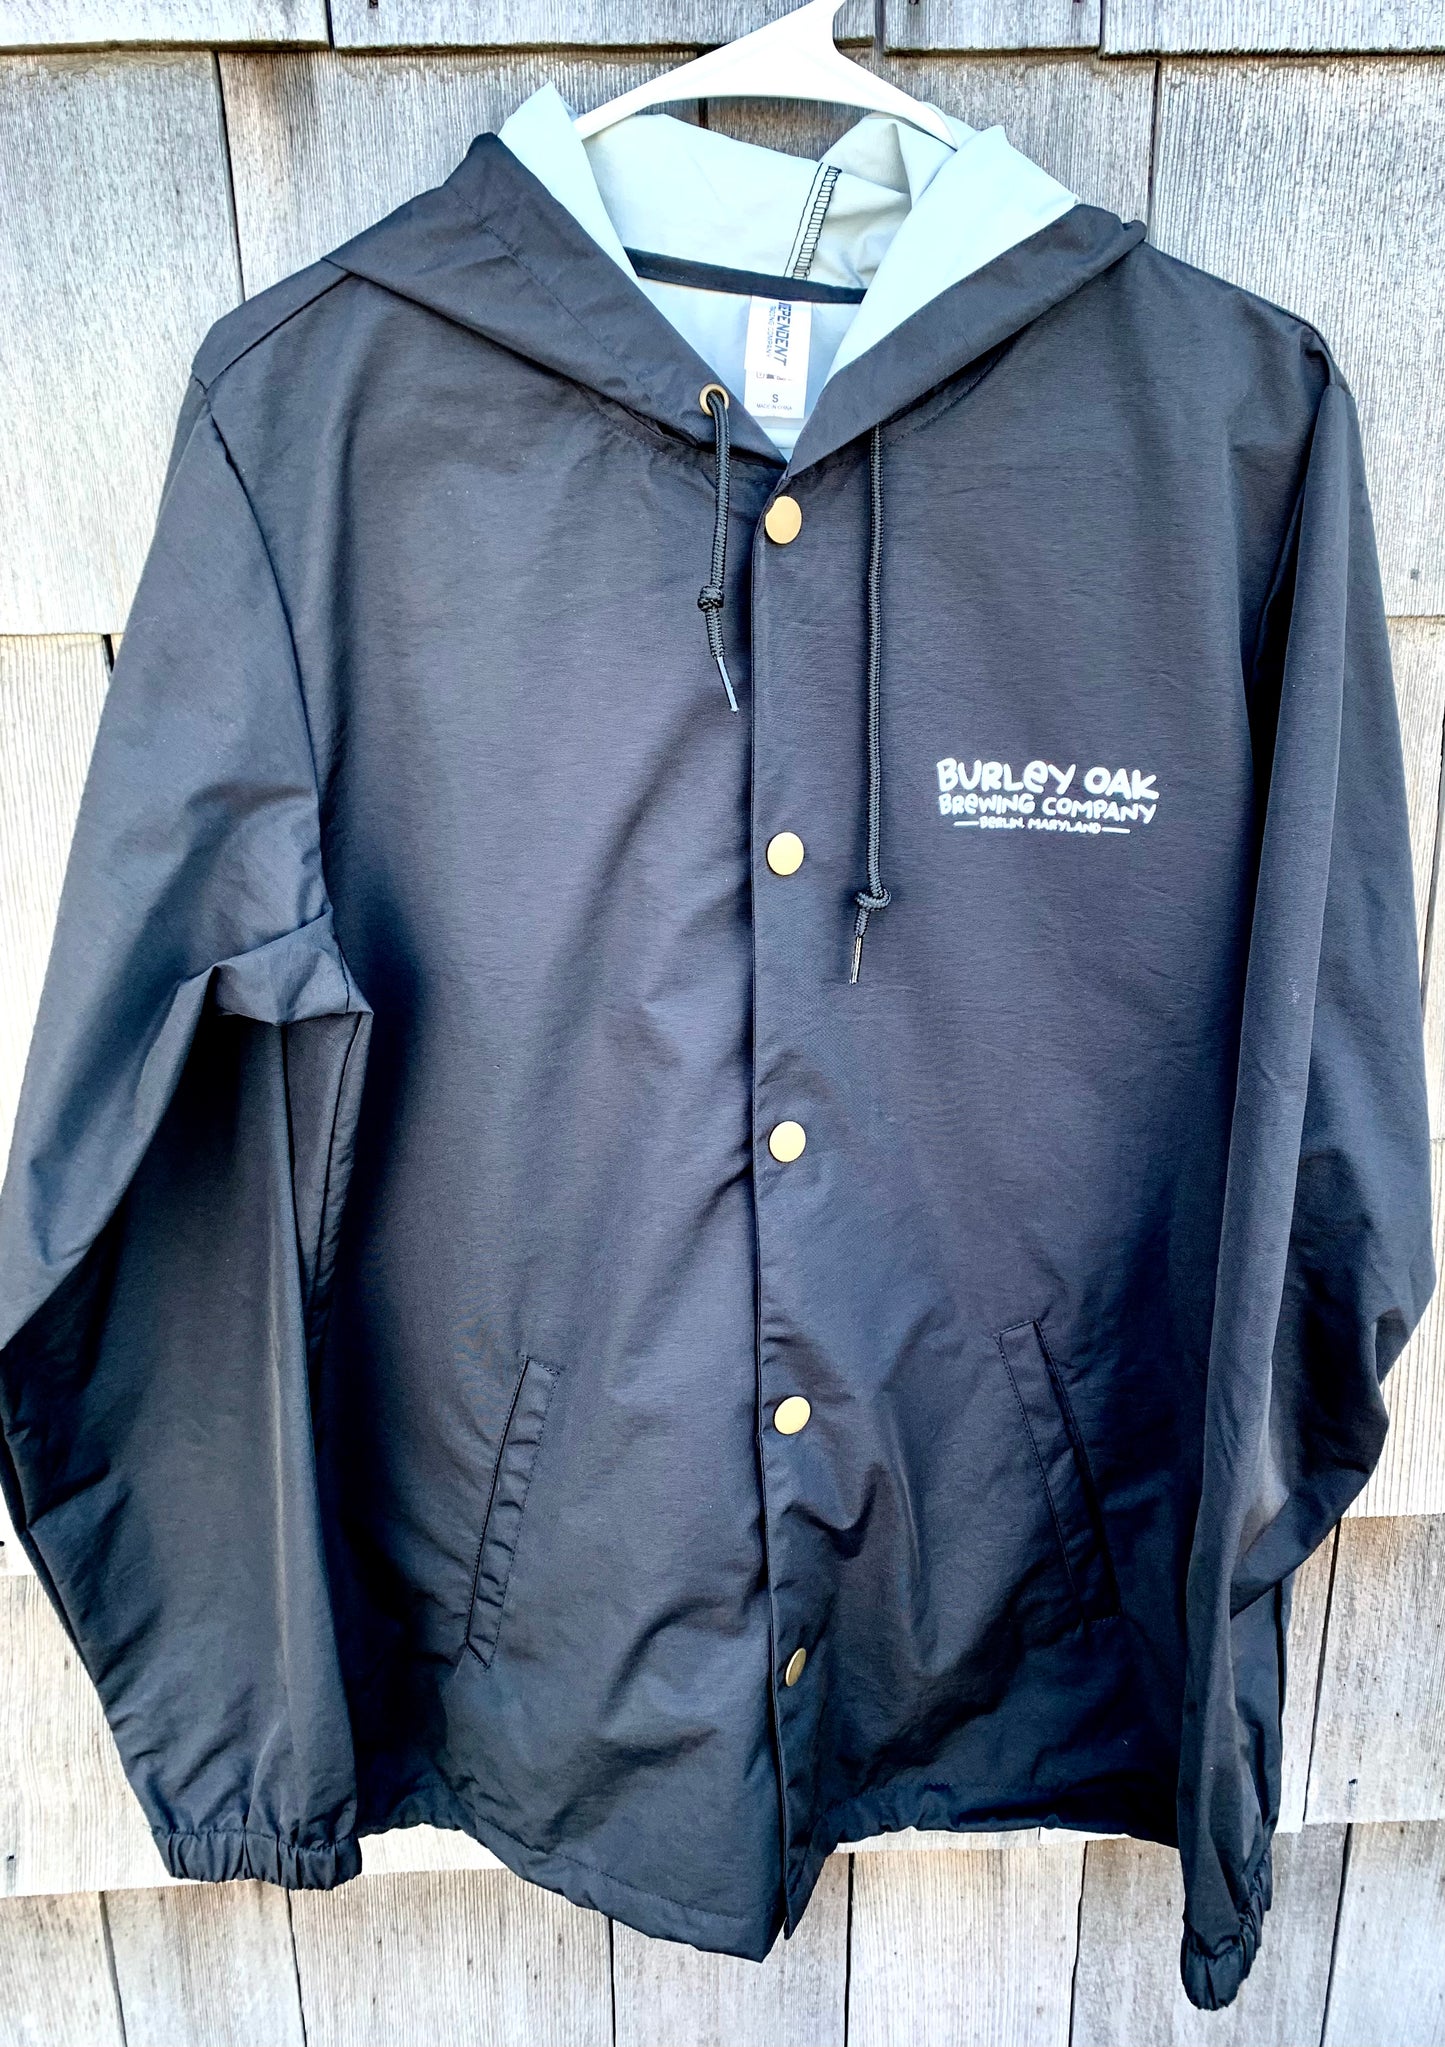 Burley Oak Black Hooded Water Resistant Coaches Jacket